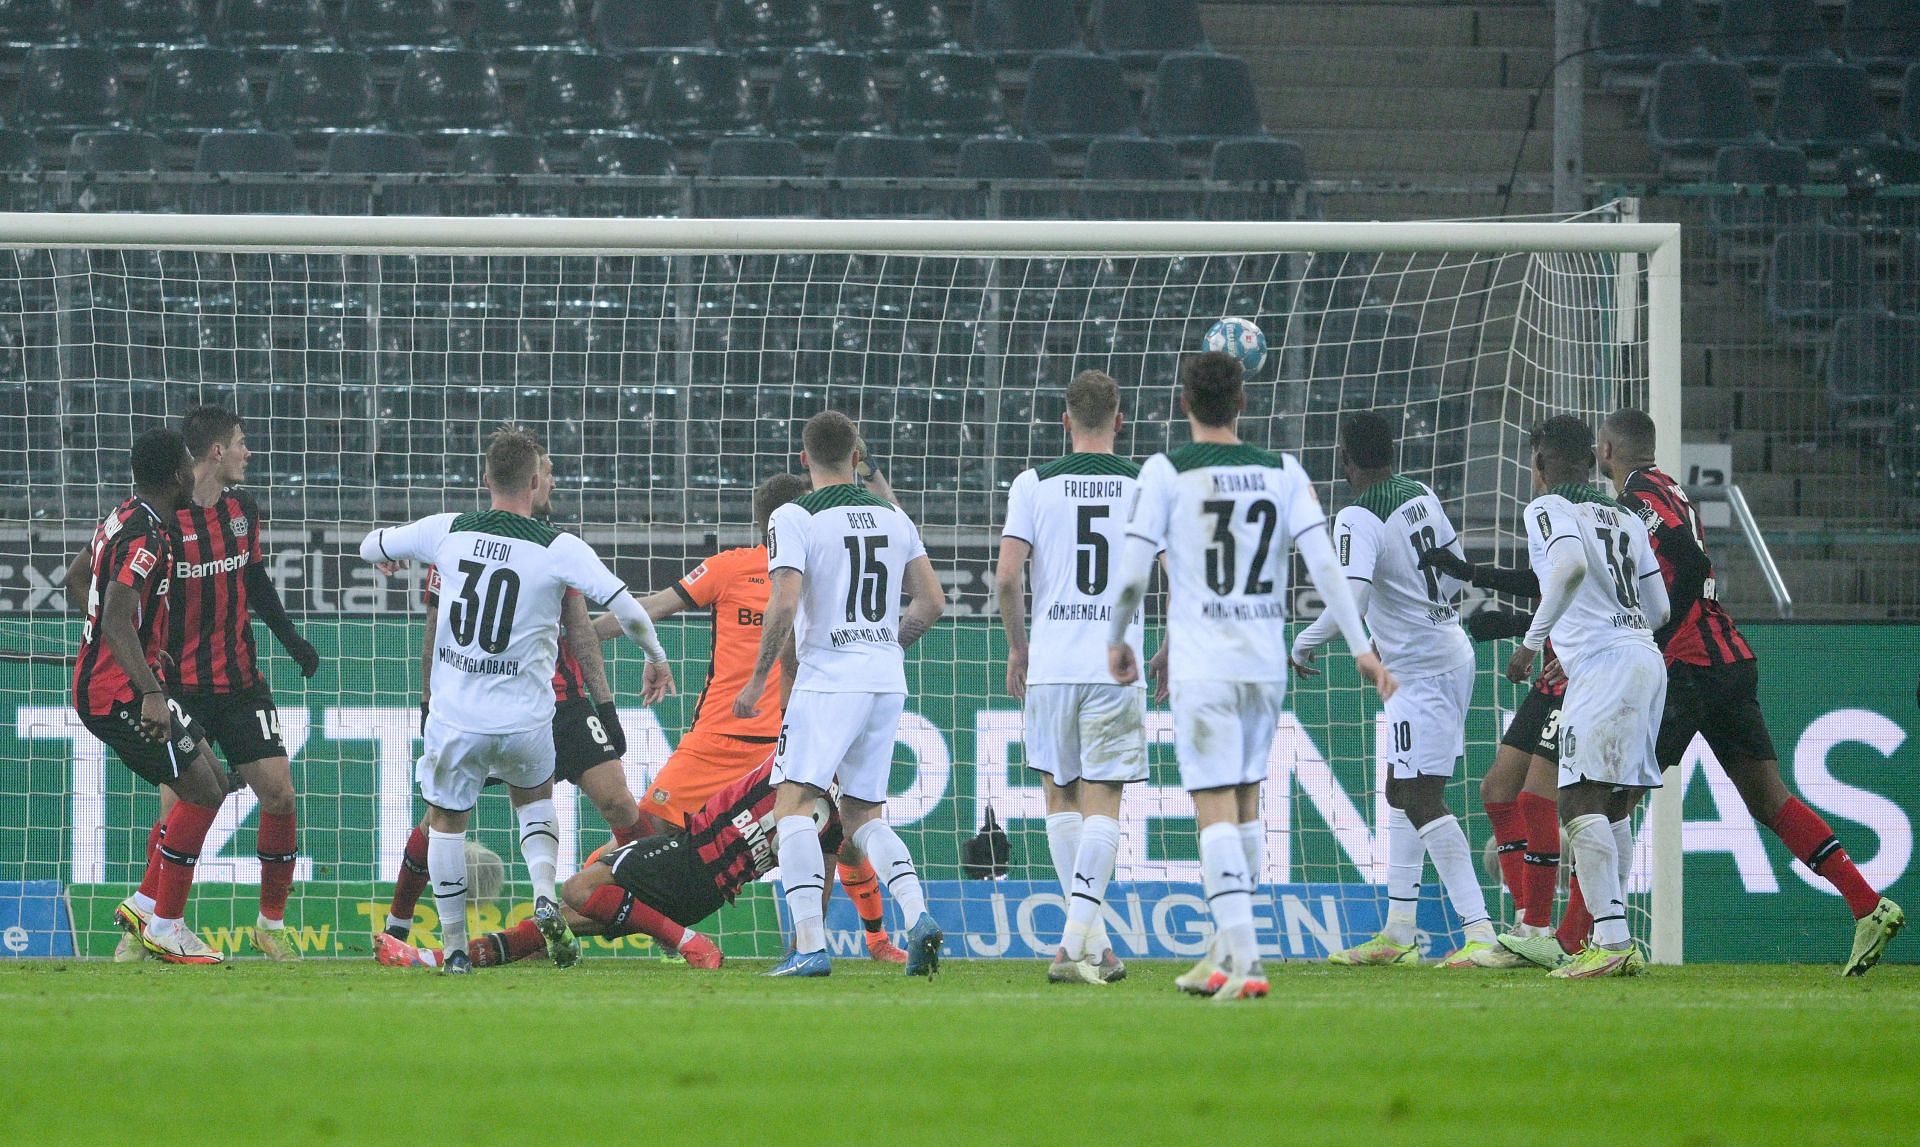 Borussia M&ouml;nchengladbach will face Hannover 96 on Wednesday - DFB-Pokal